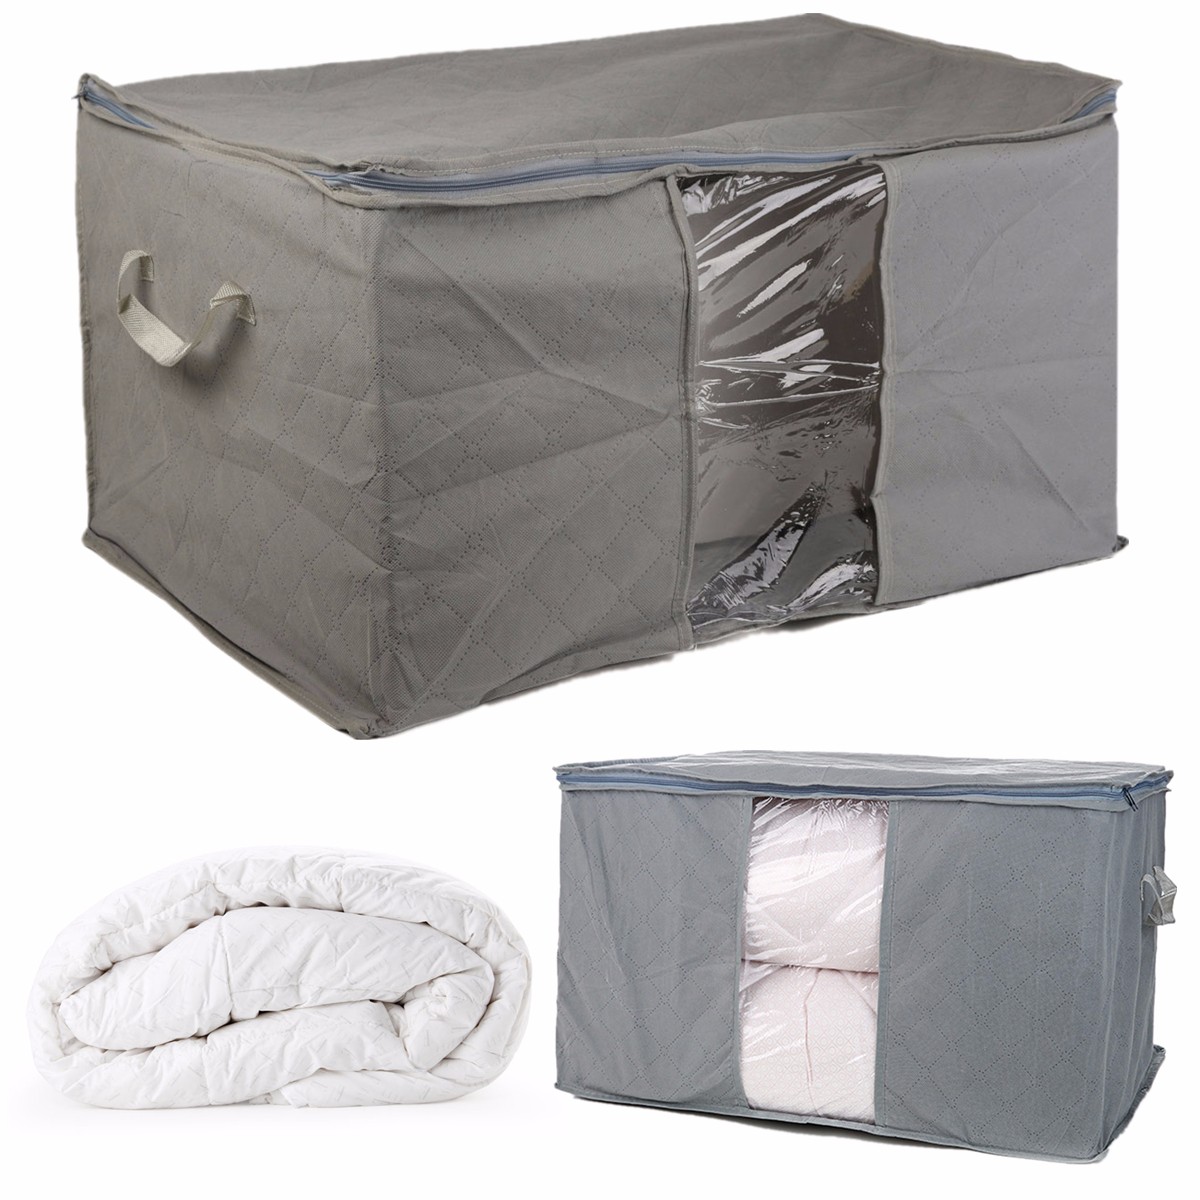 

Foldable Large Bedding Storage Bag Organiser for Pillow Clothes Quilt Bedding Duvet Blanket Under Bed Storage Organizer Box